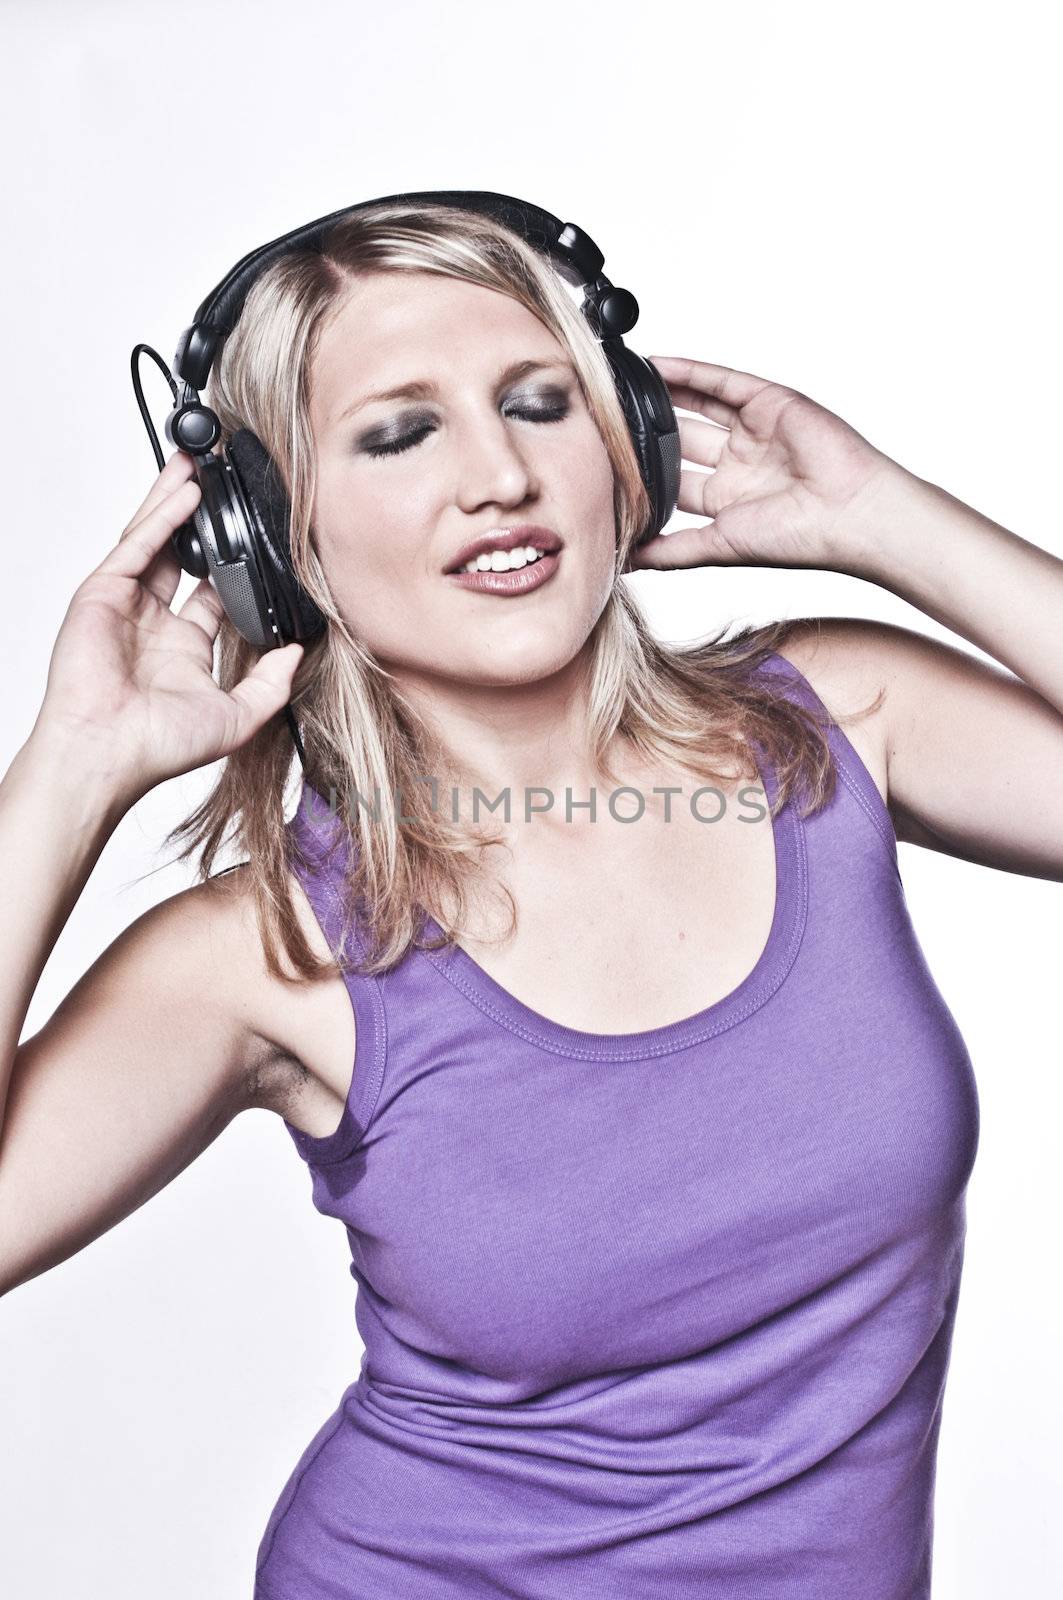 Beautiful Blond Woman Listening On Headphones by nfx702